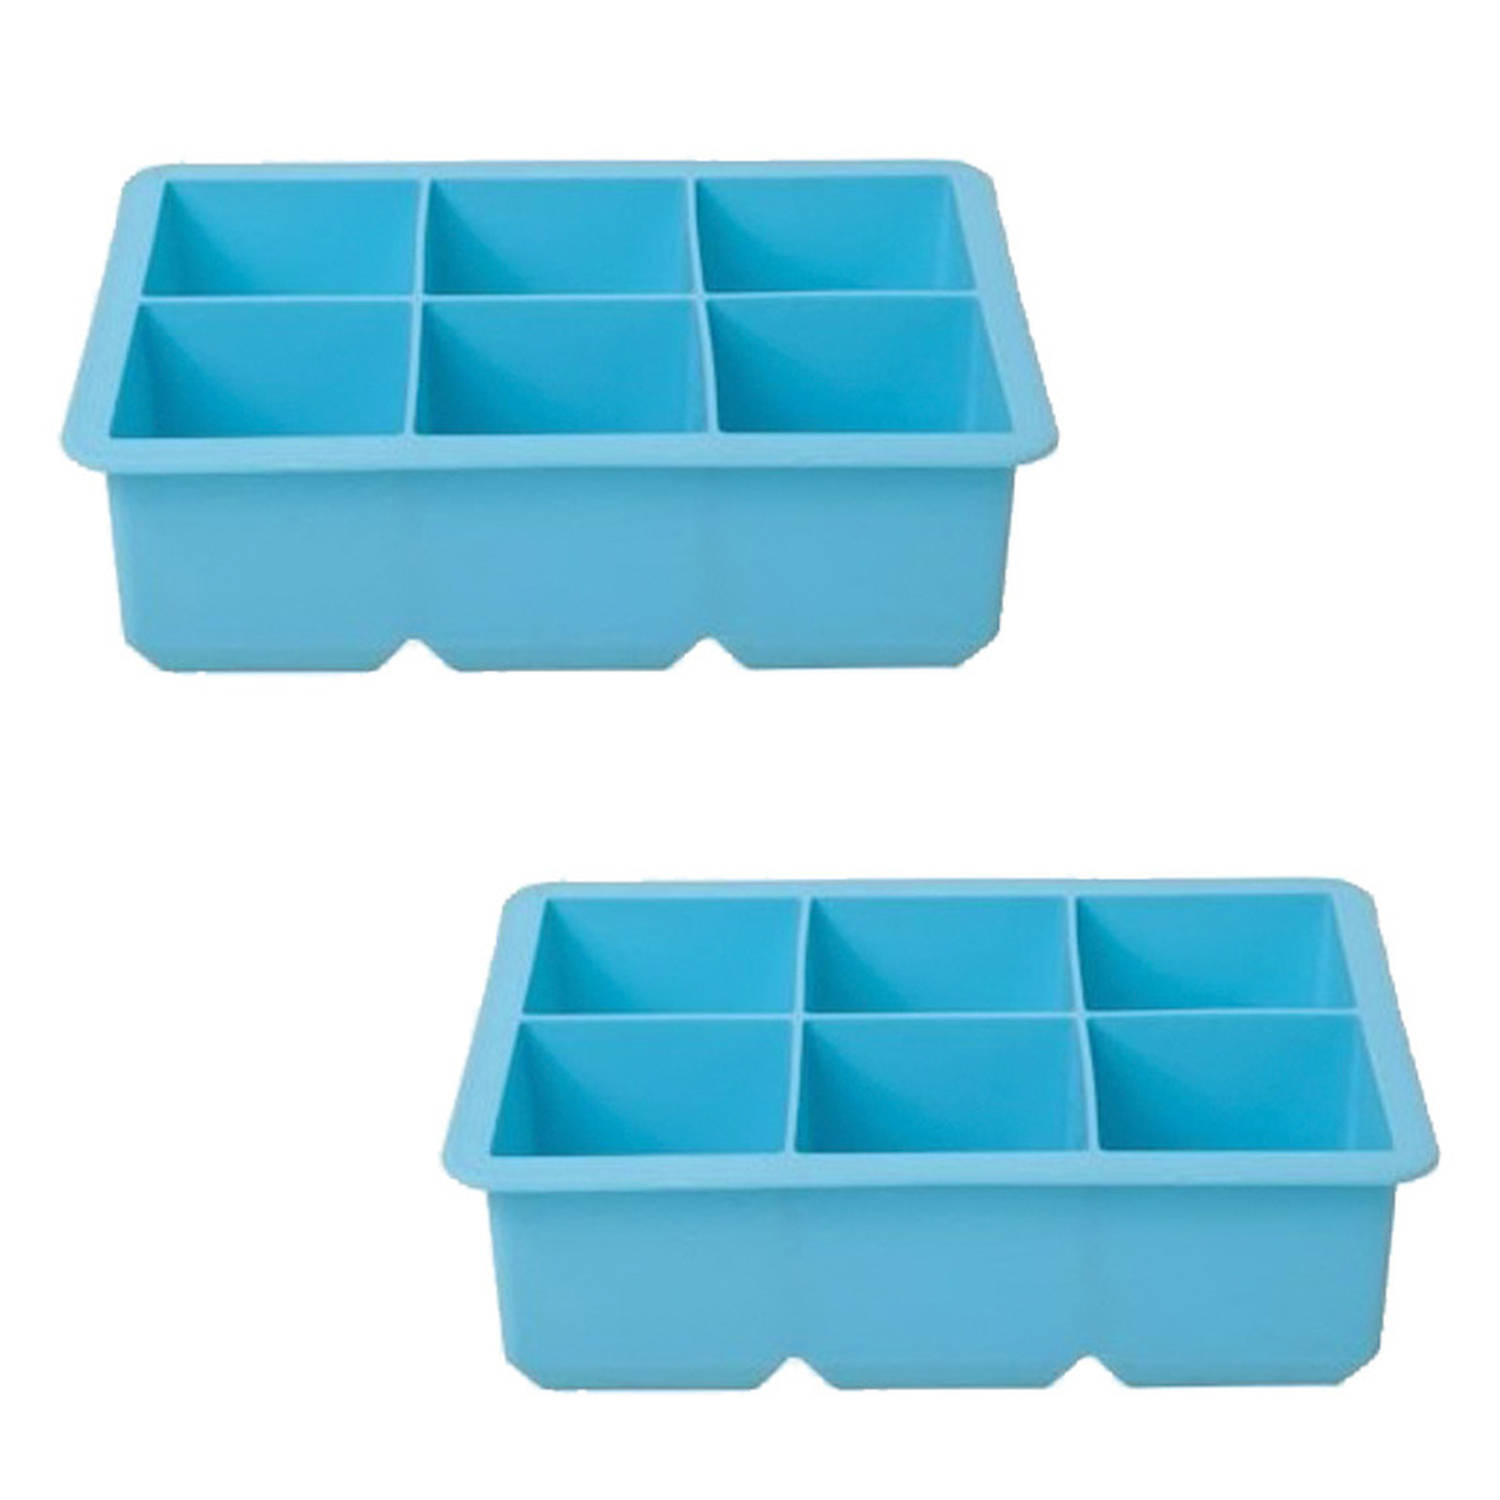 2x Blauwe ijsblokjes vormen 6 kubussen IJsblokjesvormen